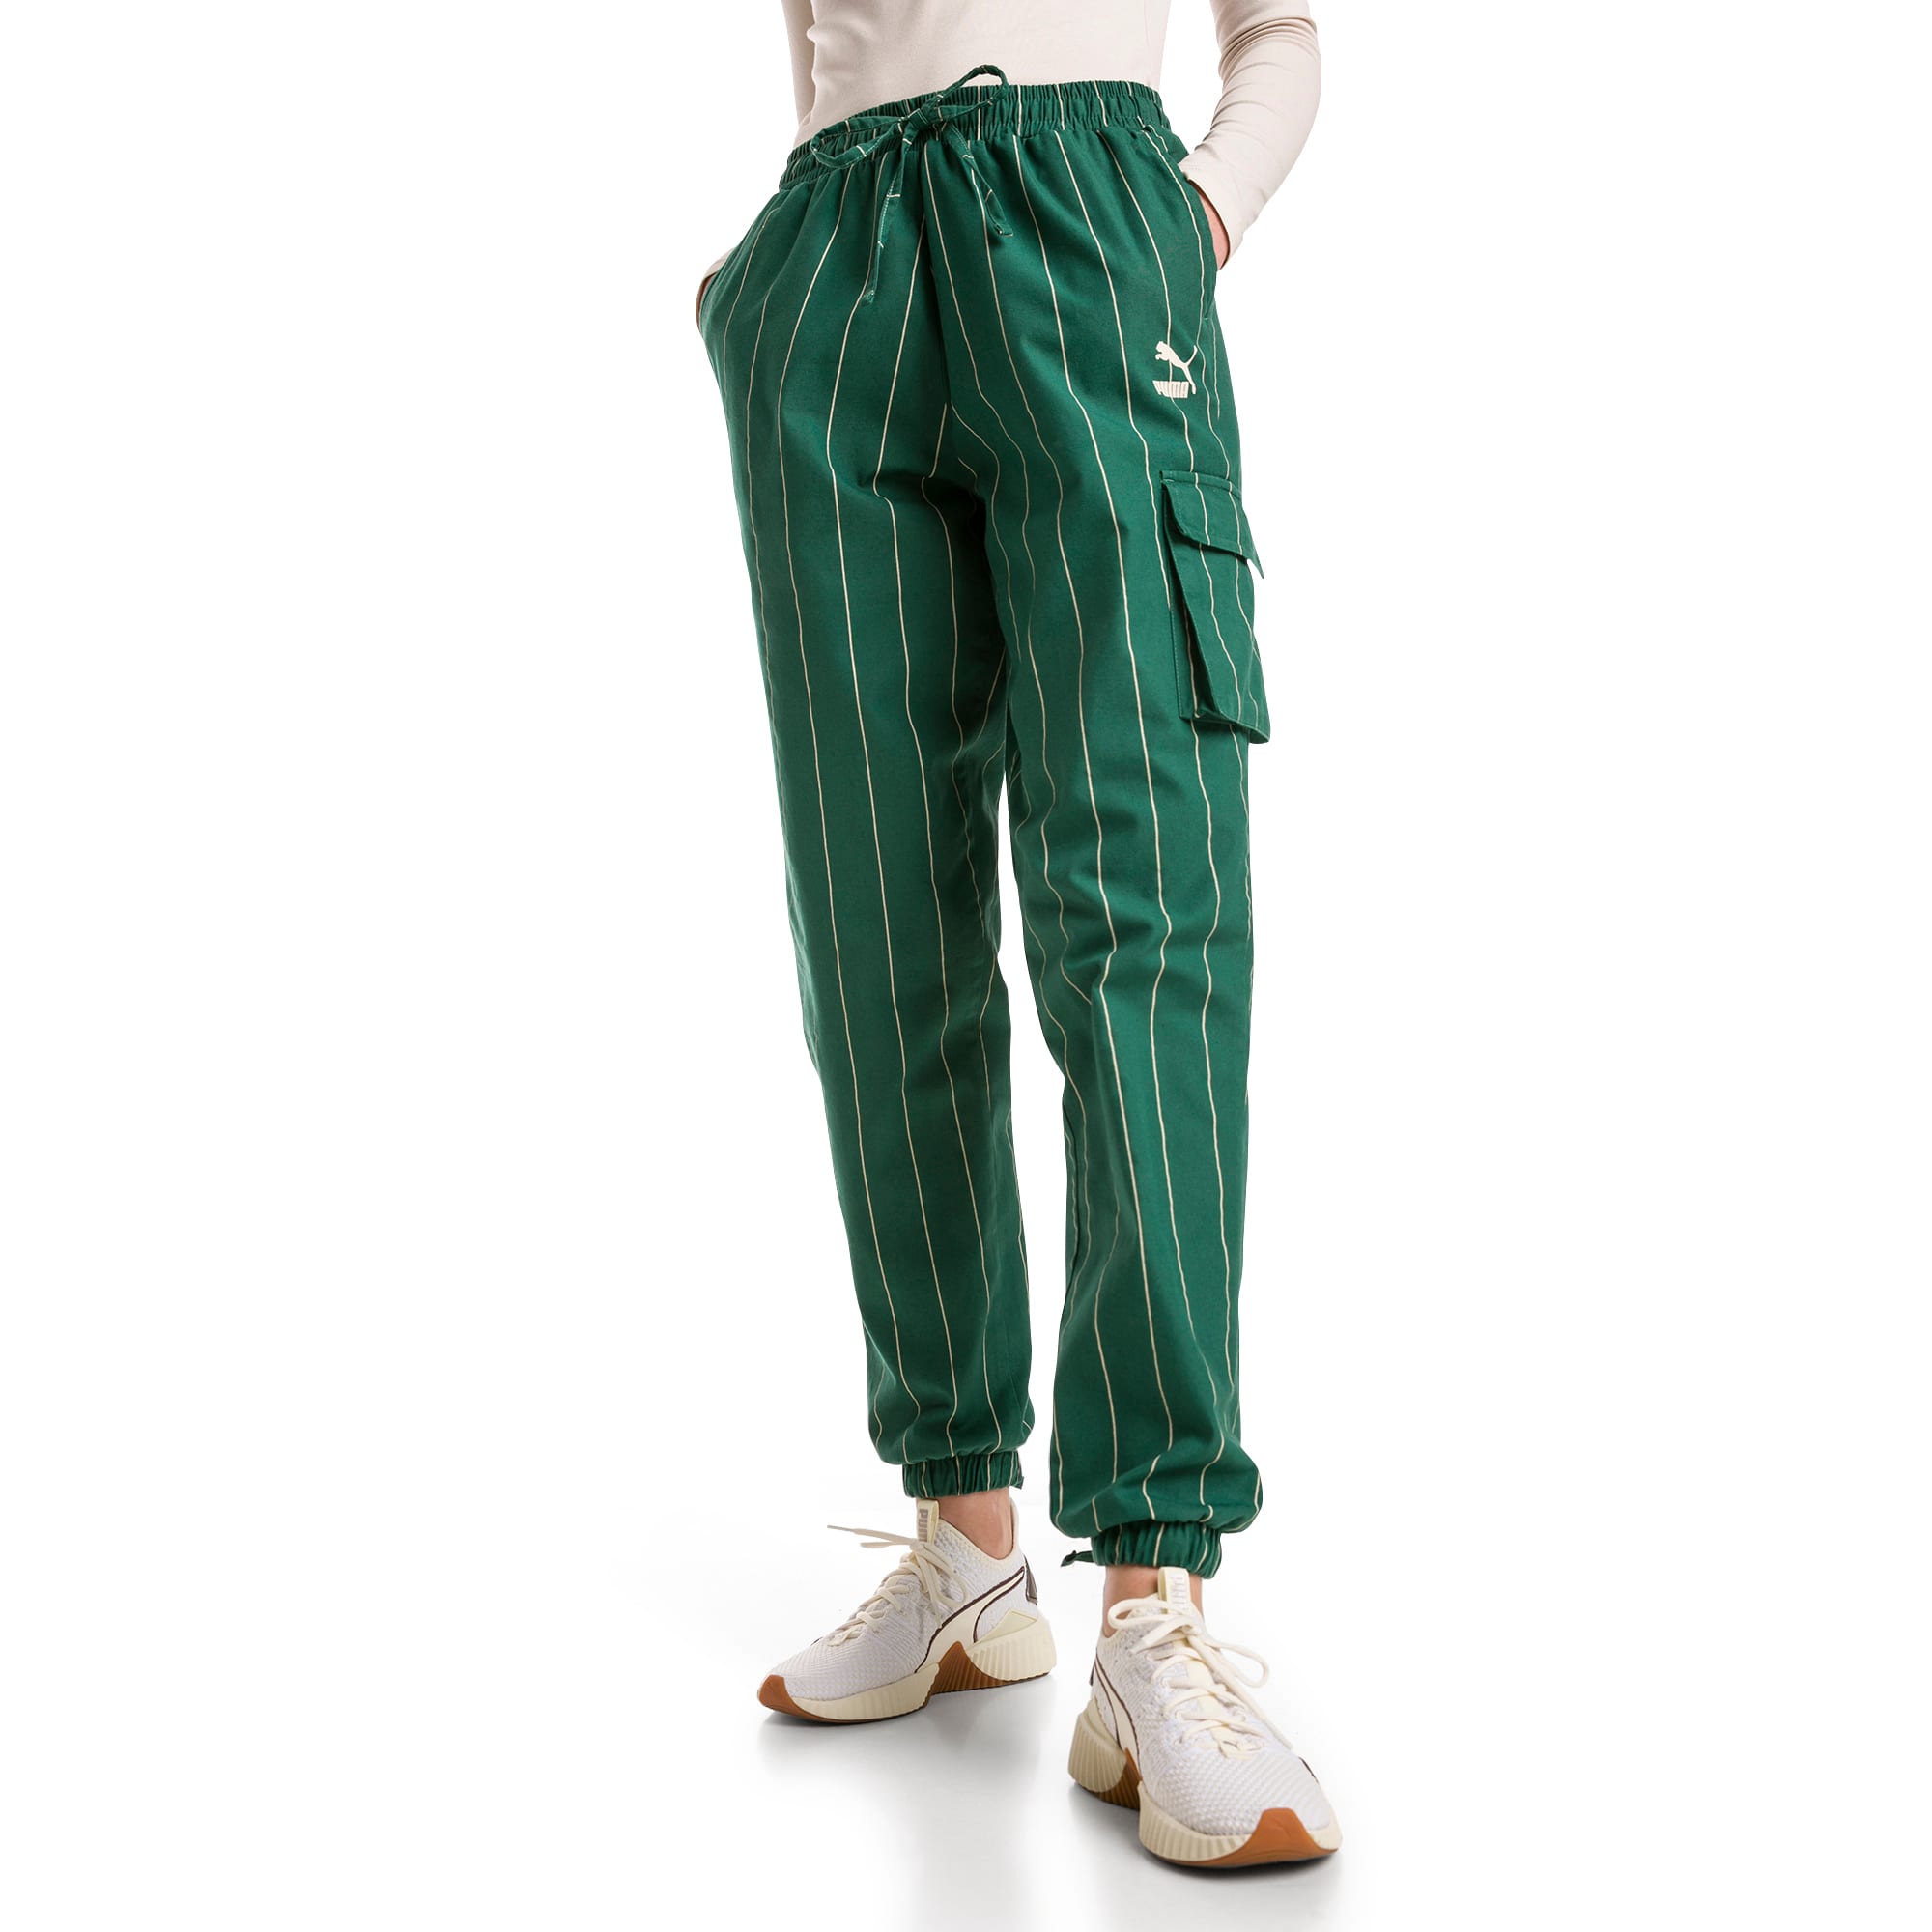 puma baggy pants green